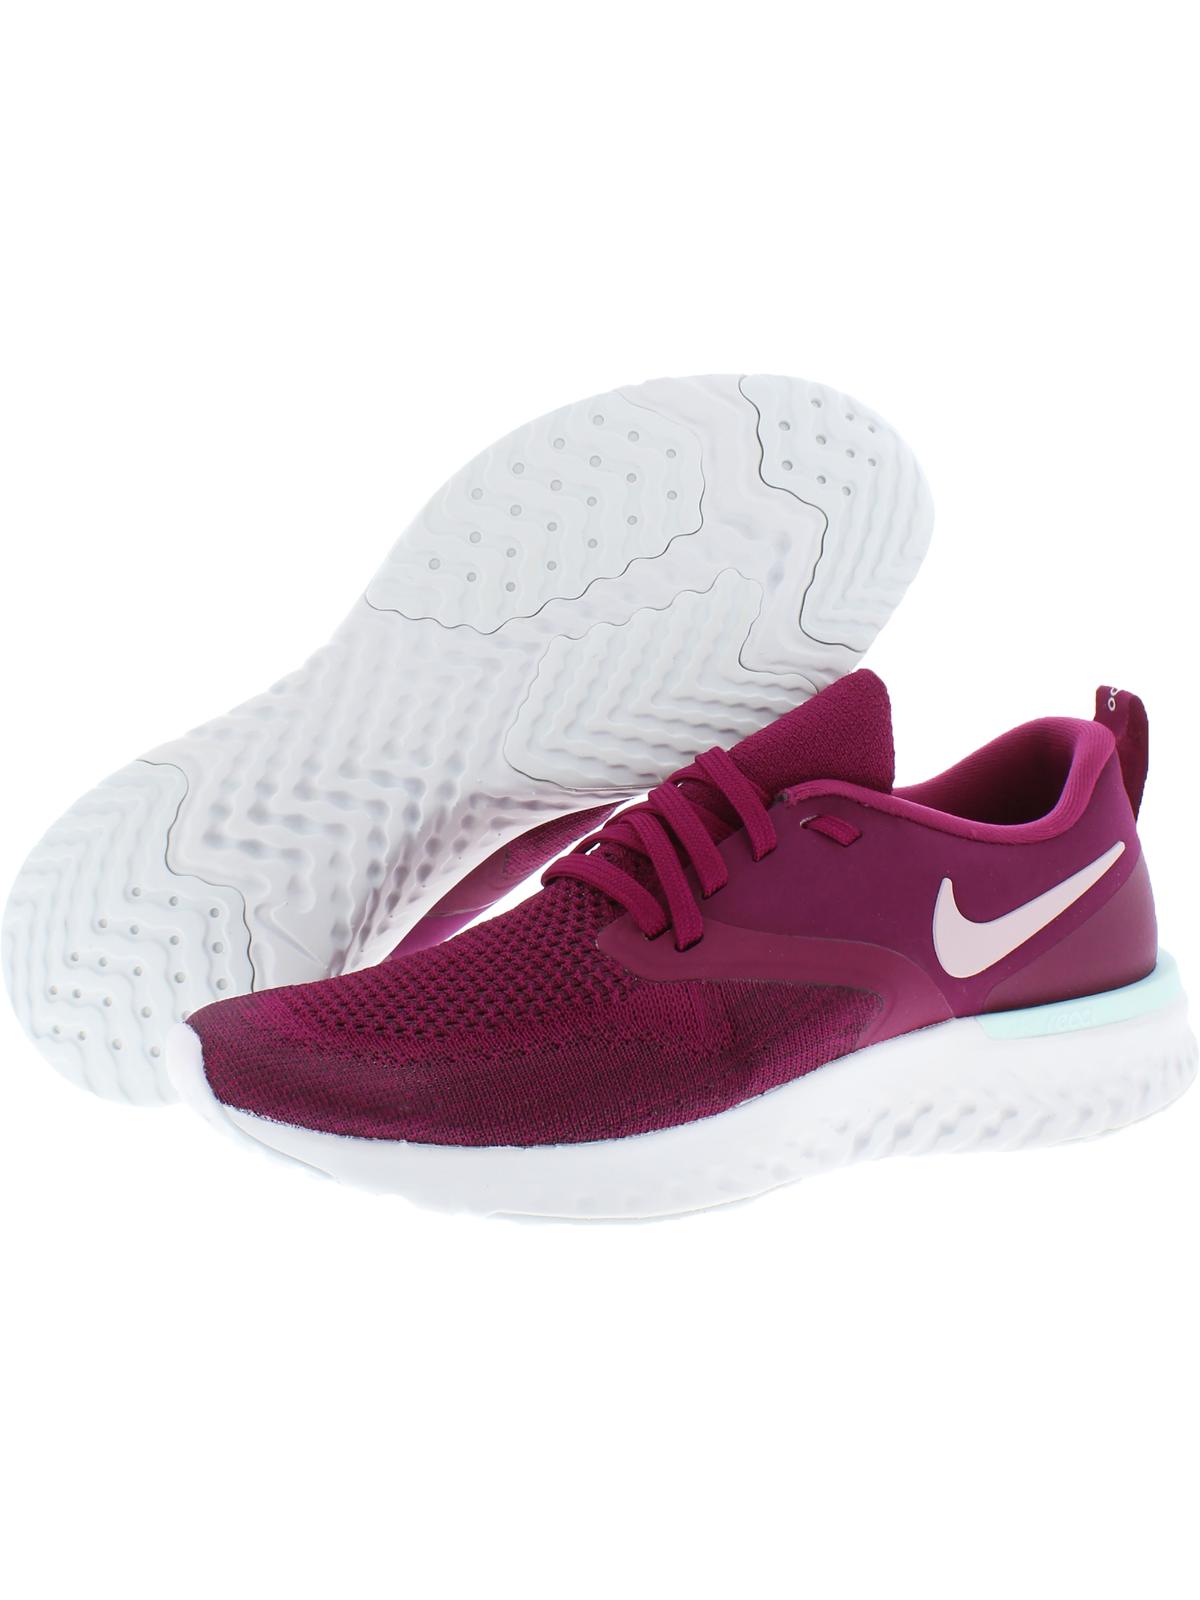 Nike Womens Odyssey React 2 Flyknit Fitness Running Shoes Purple 9 Medium (B,M) - image 2 of 2